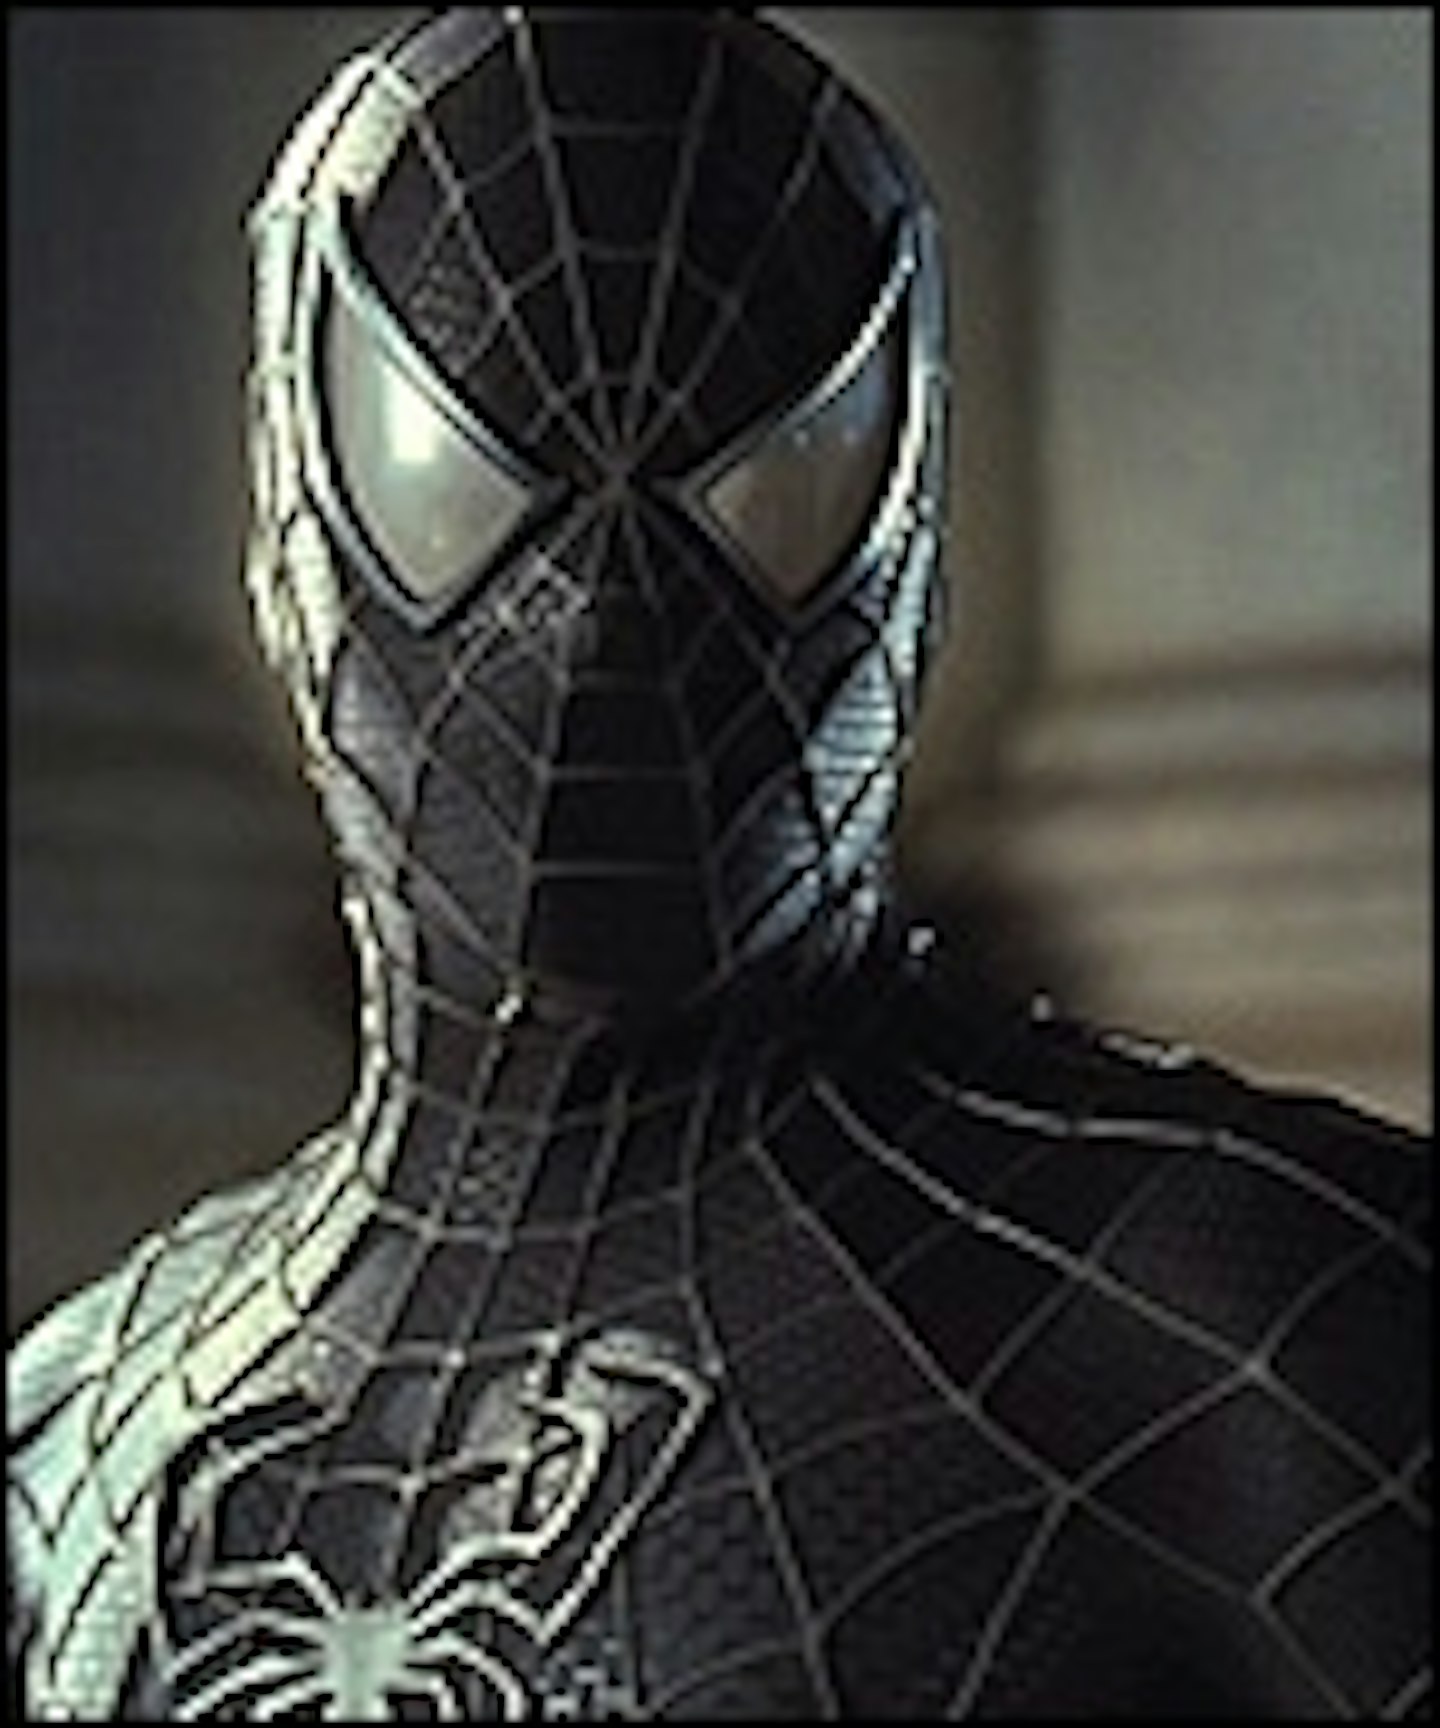 Spider-Man 3 Trailer Swings In